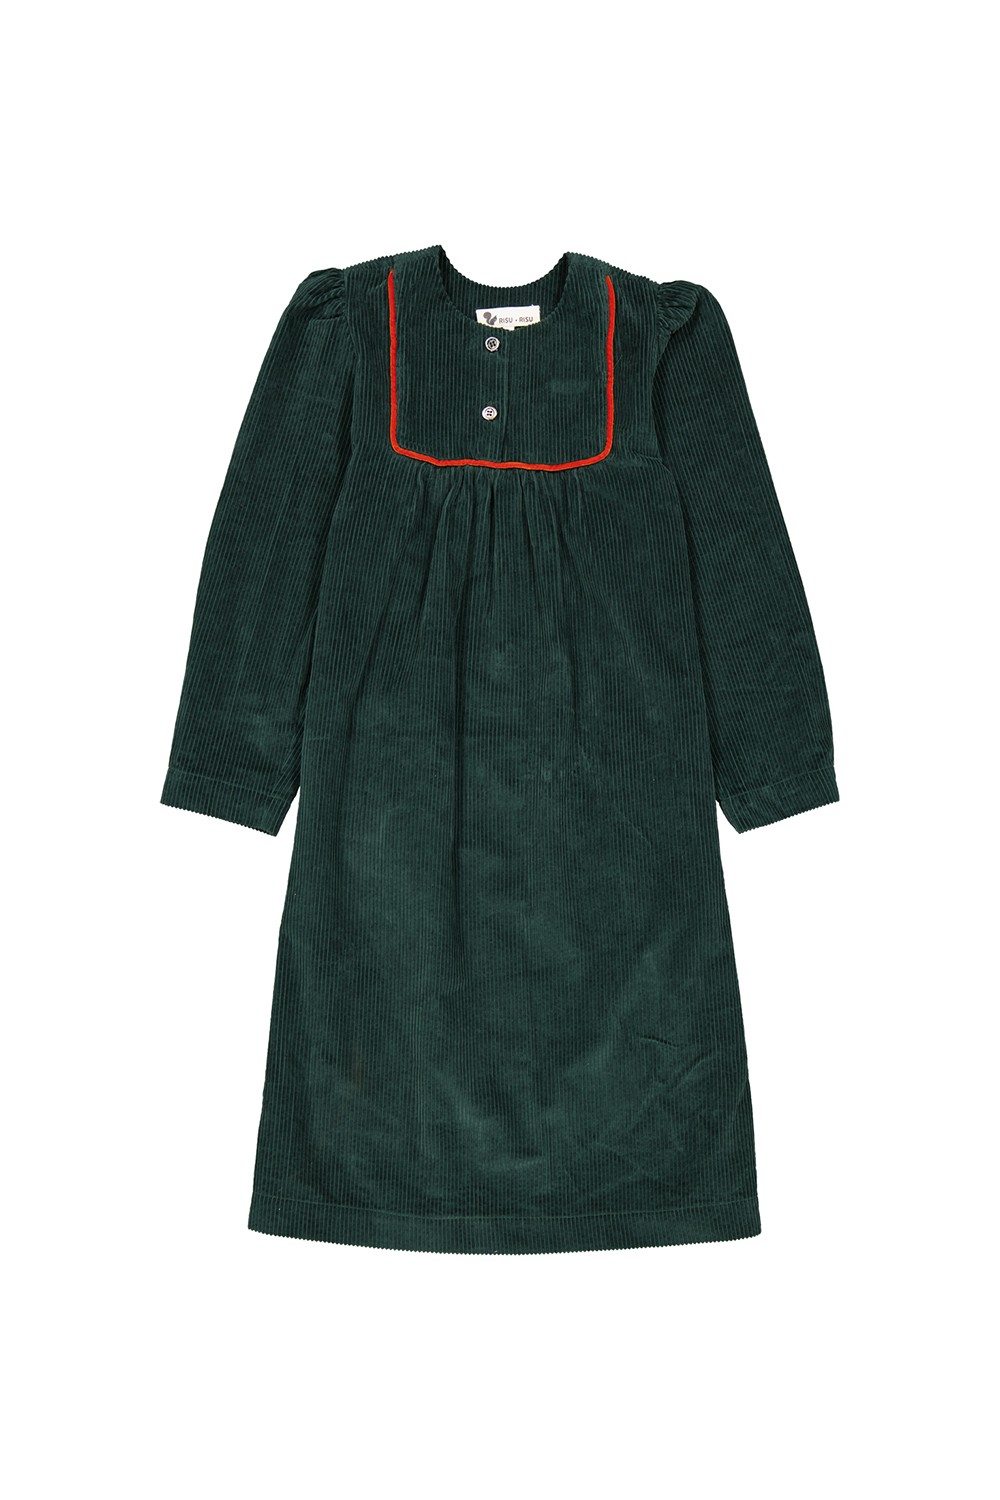 corduroy dress maline evergreen green pine organic cotton sleeves girl